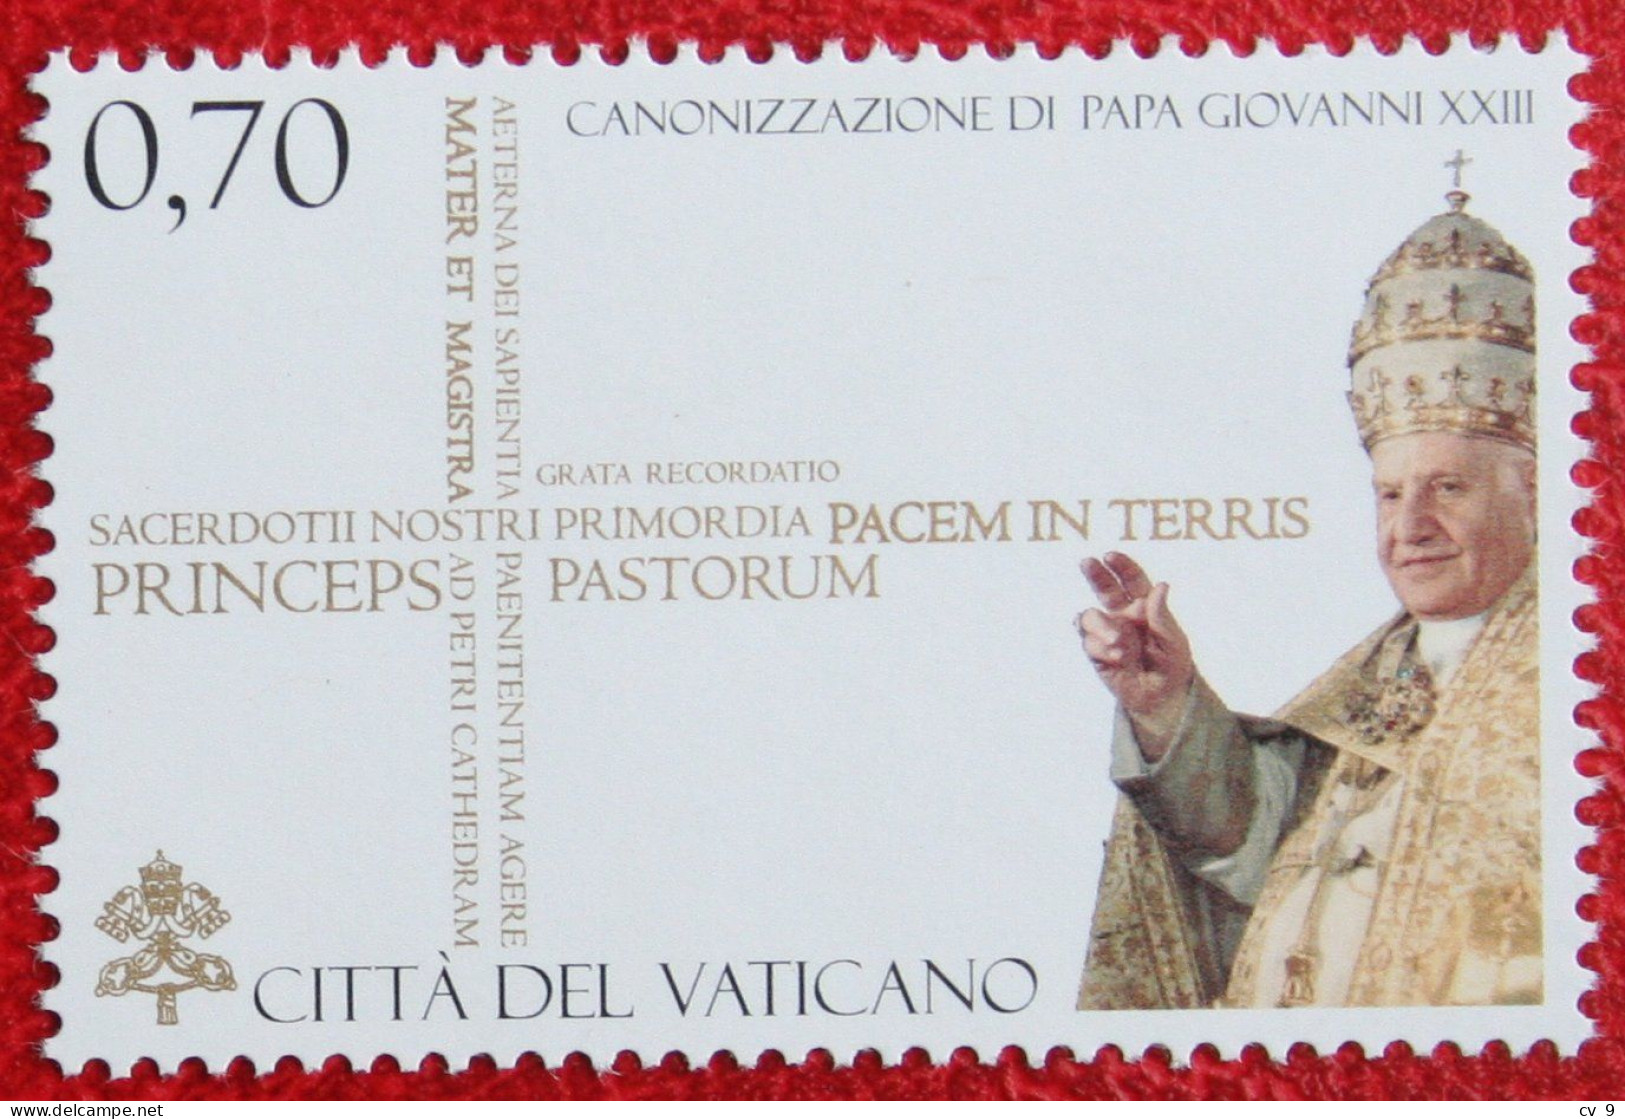 Canonification Of Pope John XXIII  2014 Mi 1799 Yv 1653 POSTFRIS / MNH / ** VATICANO VATICAN - Nuevos